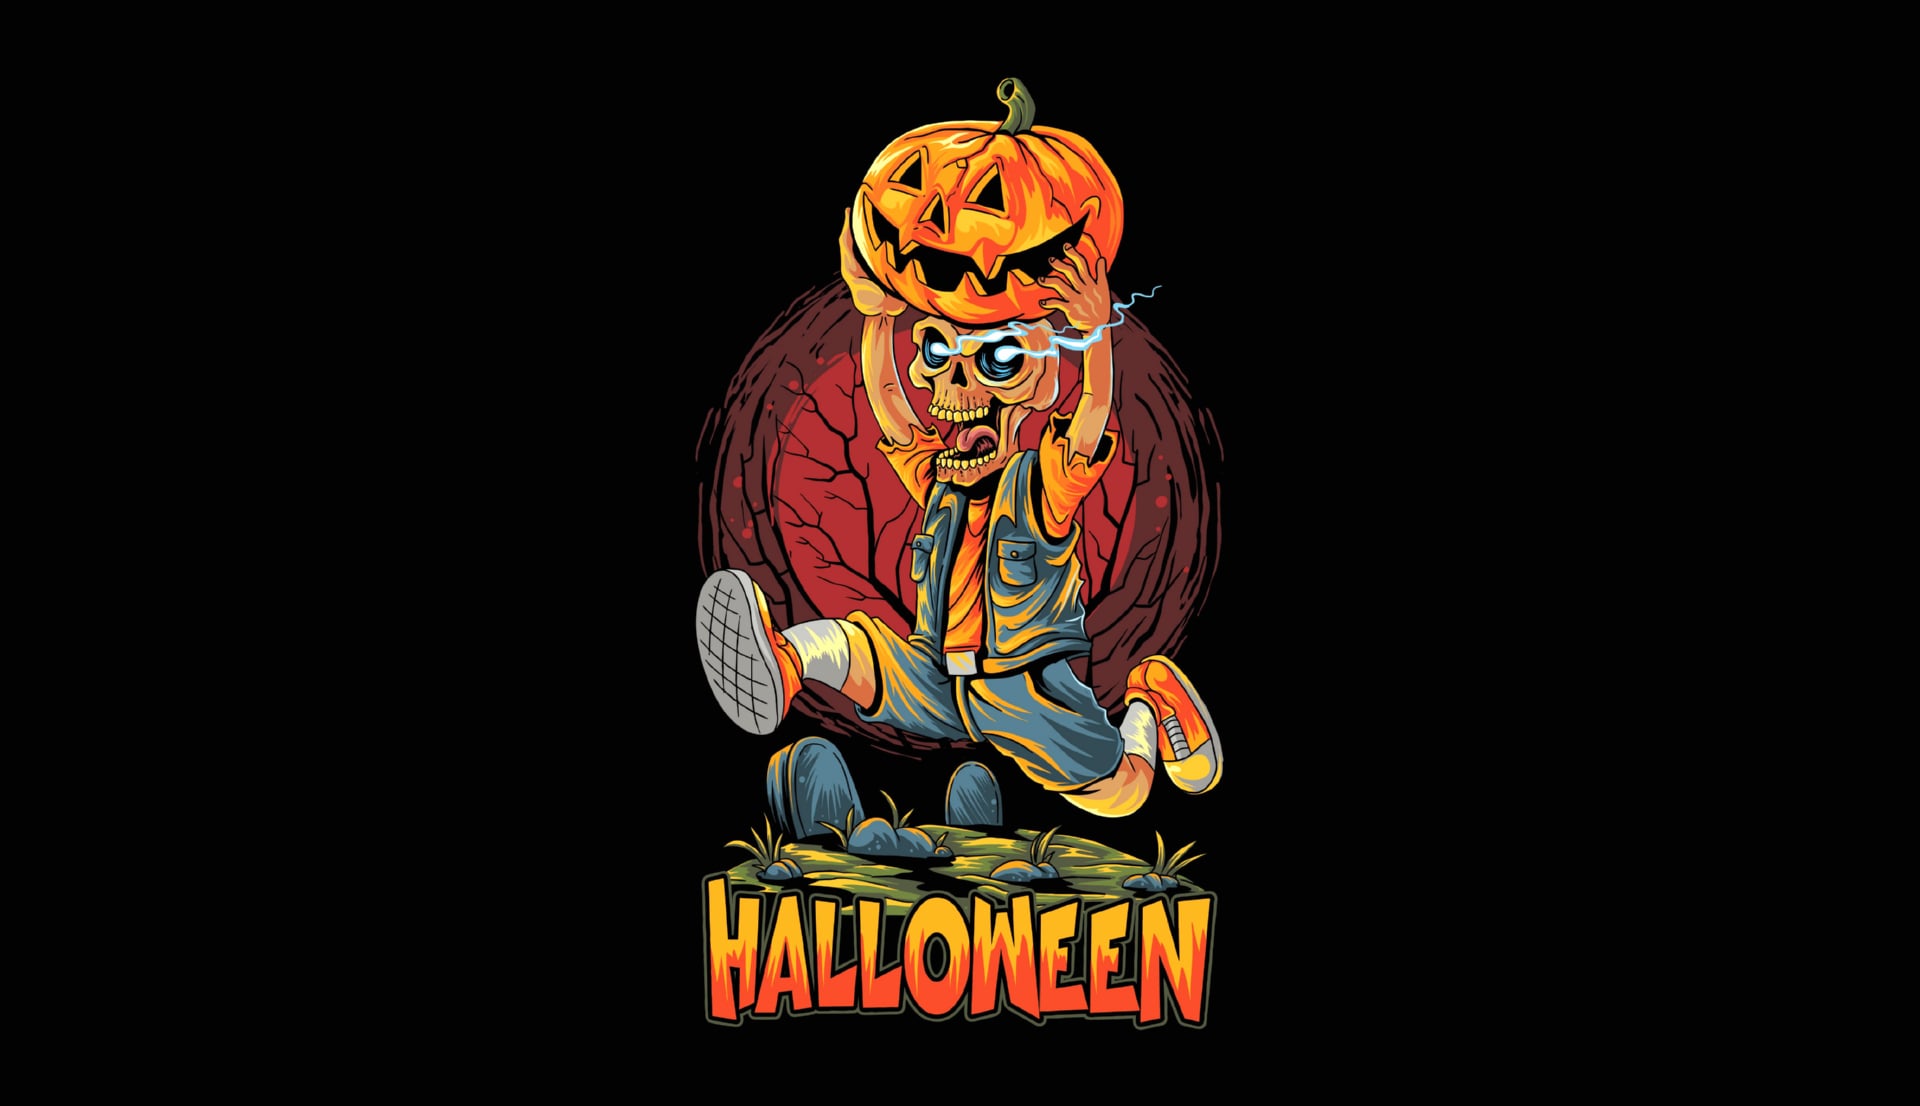 Digital Art Halloween zombie at 2048 x 2048 iPad size wallpapers HD quality